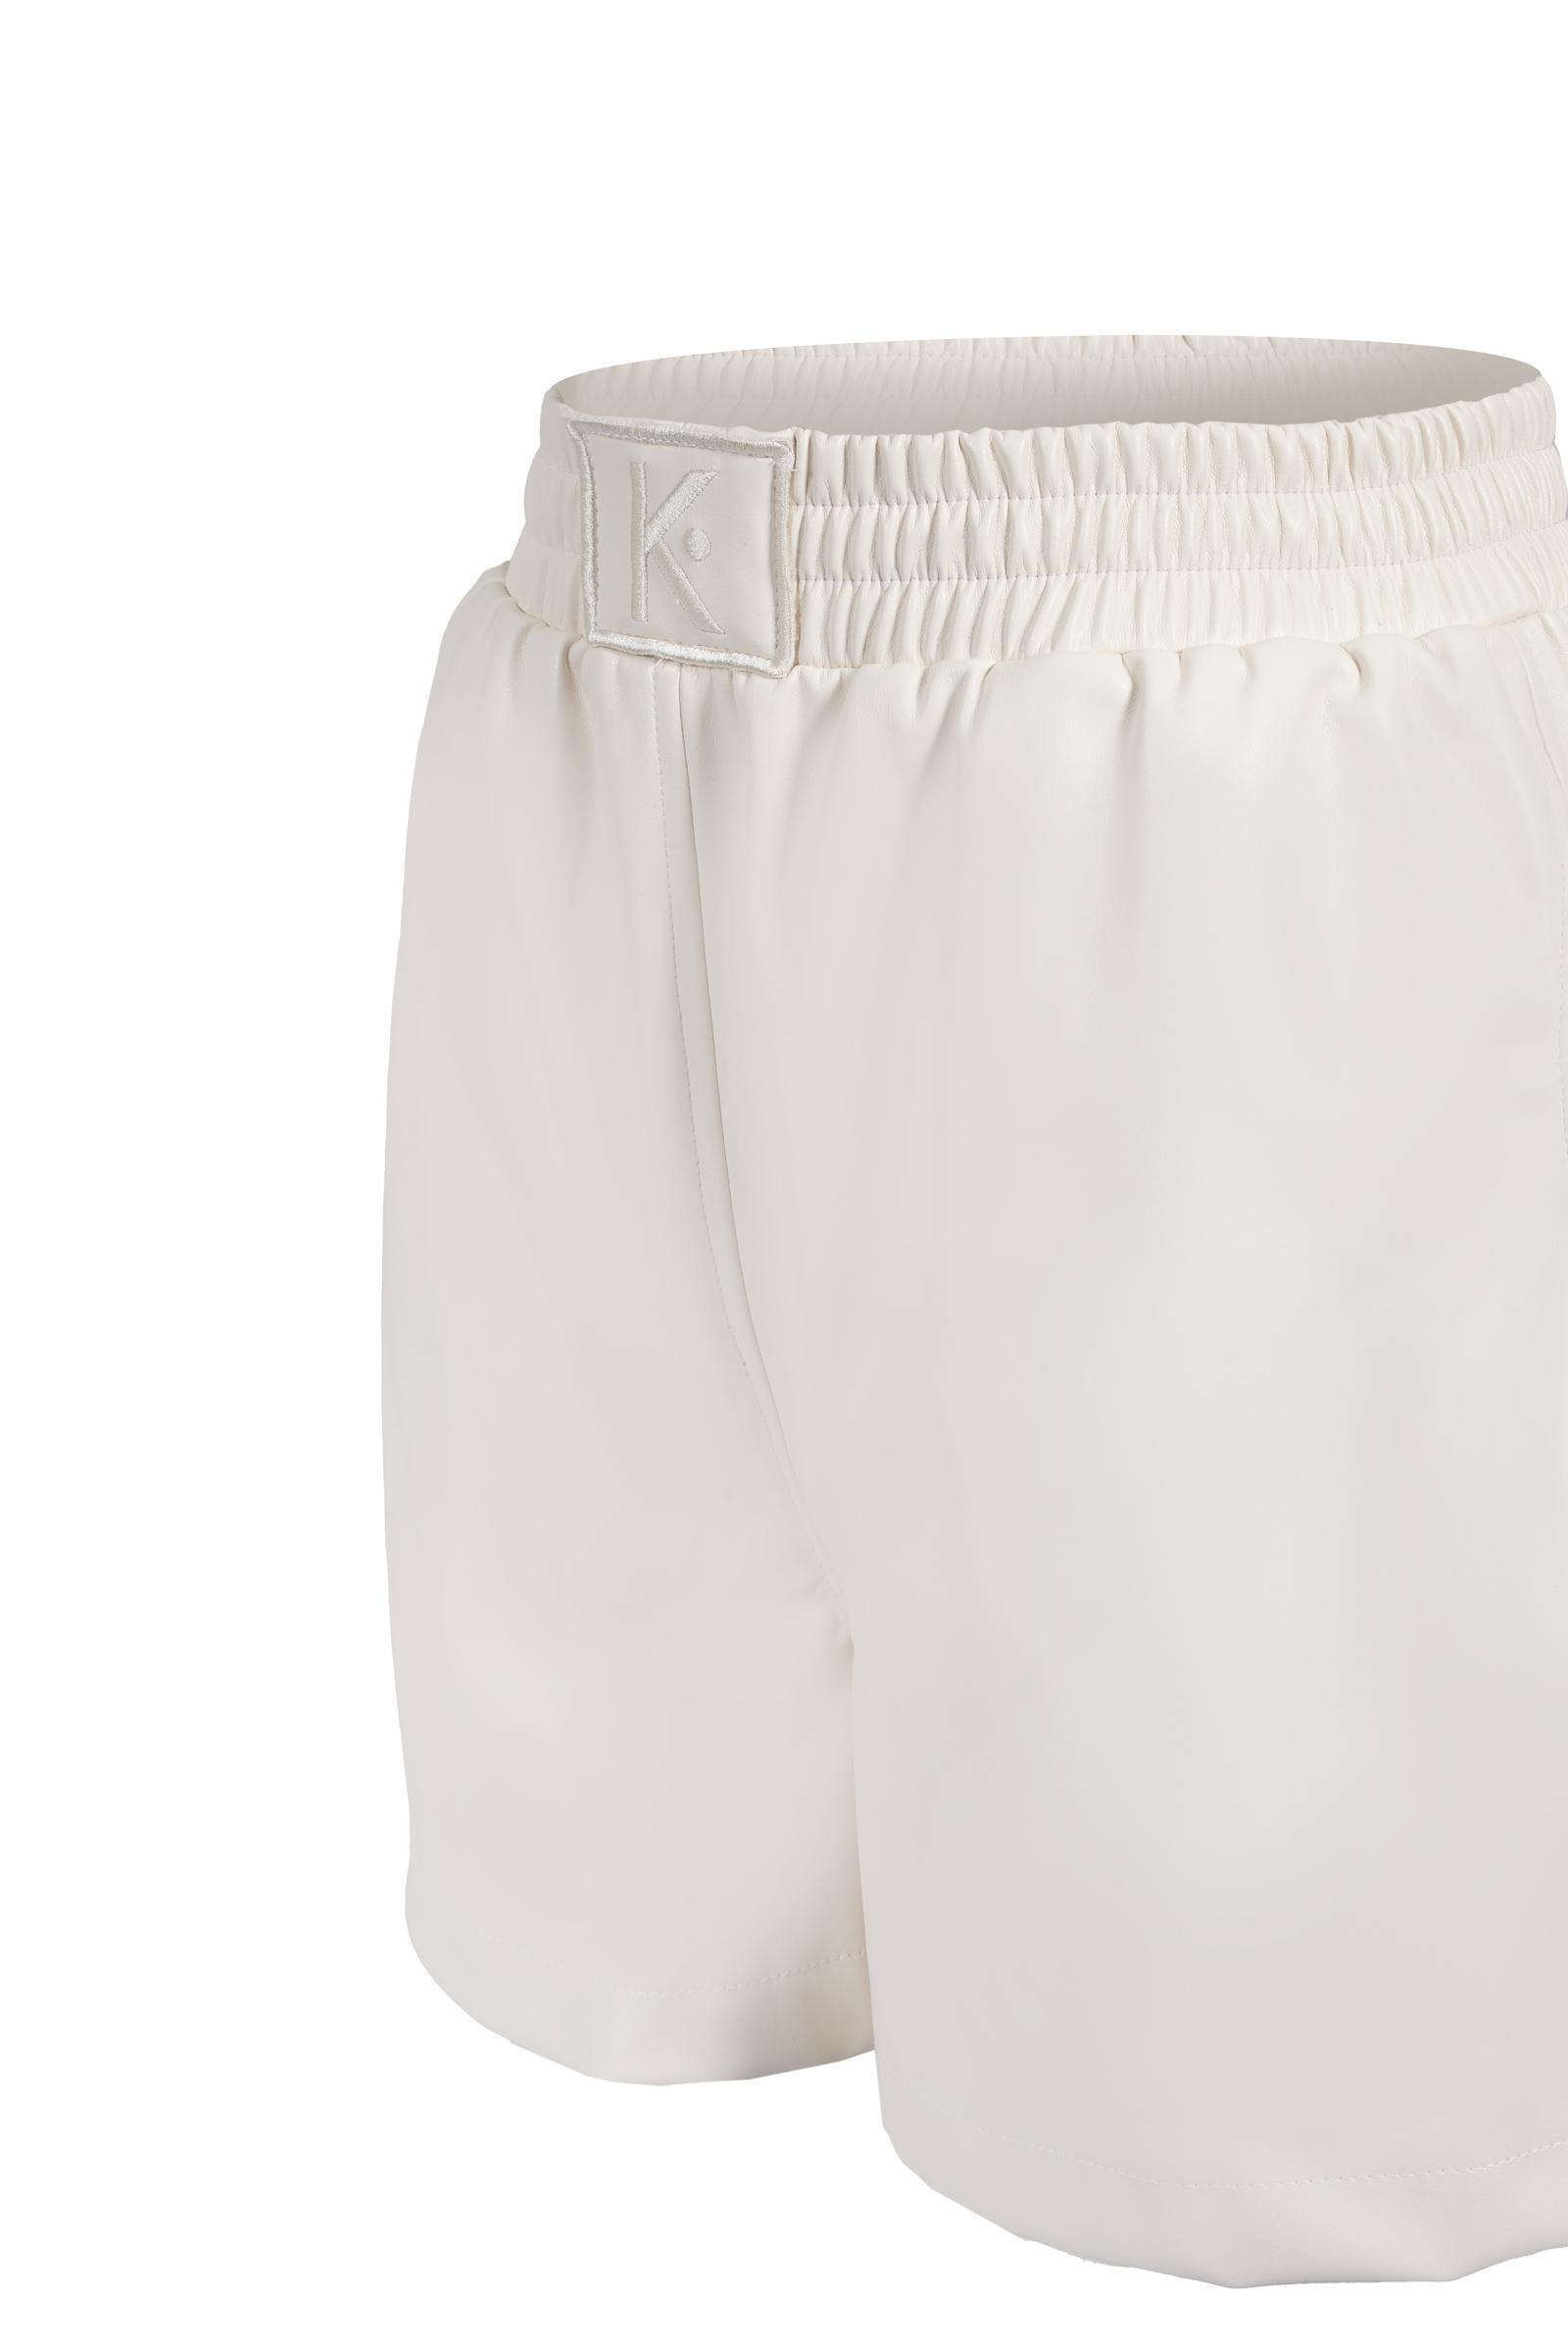 White Leather Mini Shorts